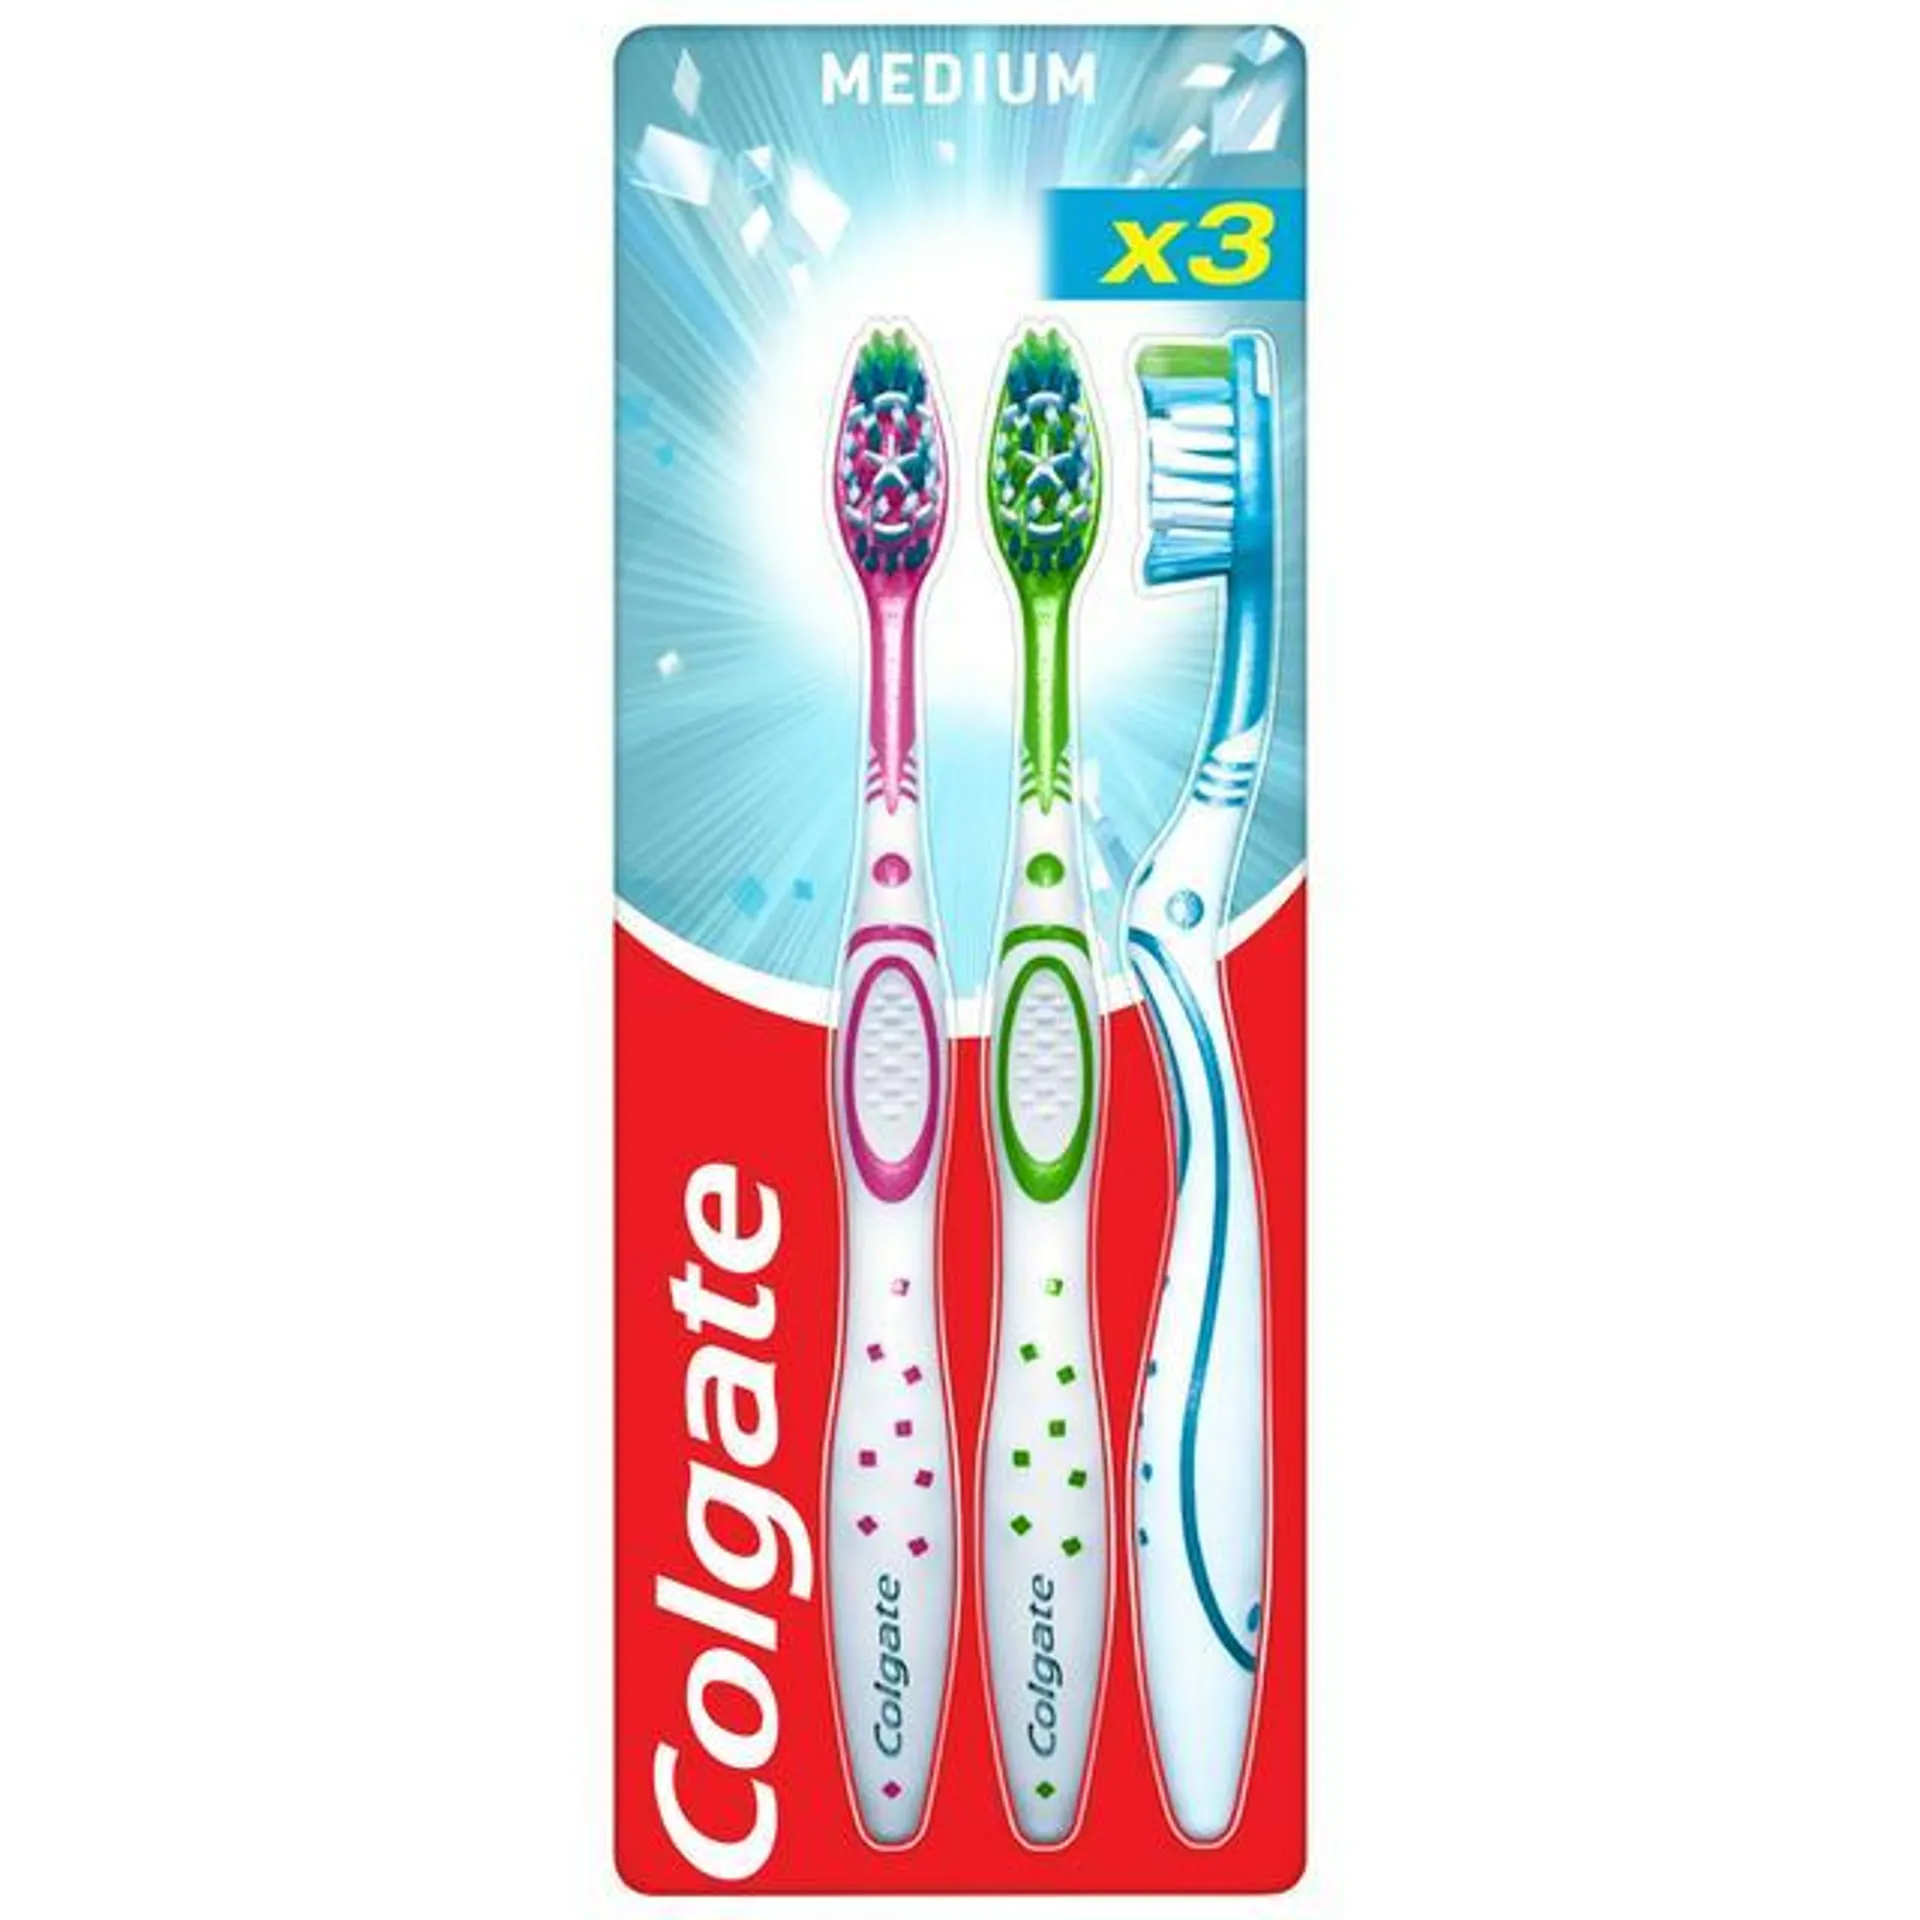 Colgate Max White Medium Toothbrush x3